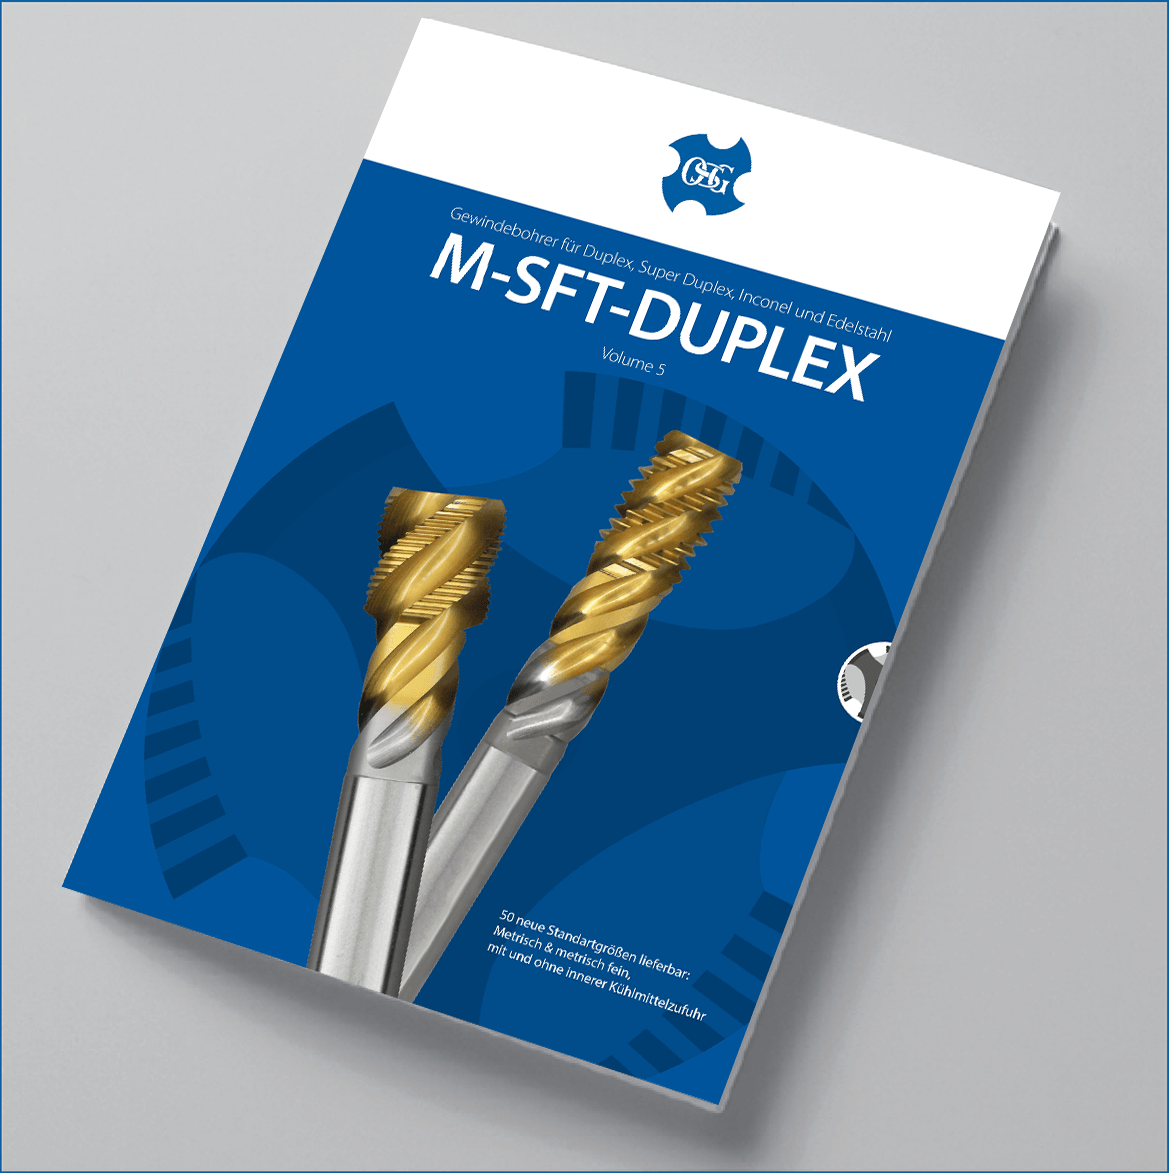 M-SFT-DUPLEX